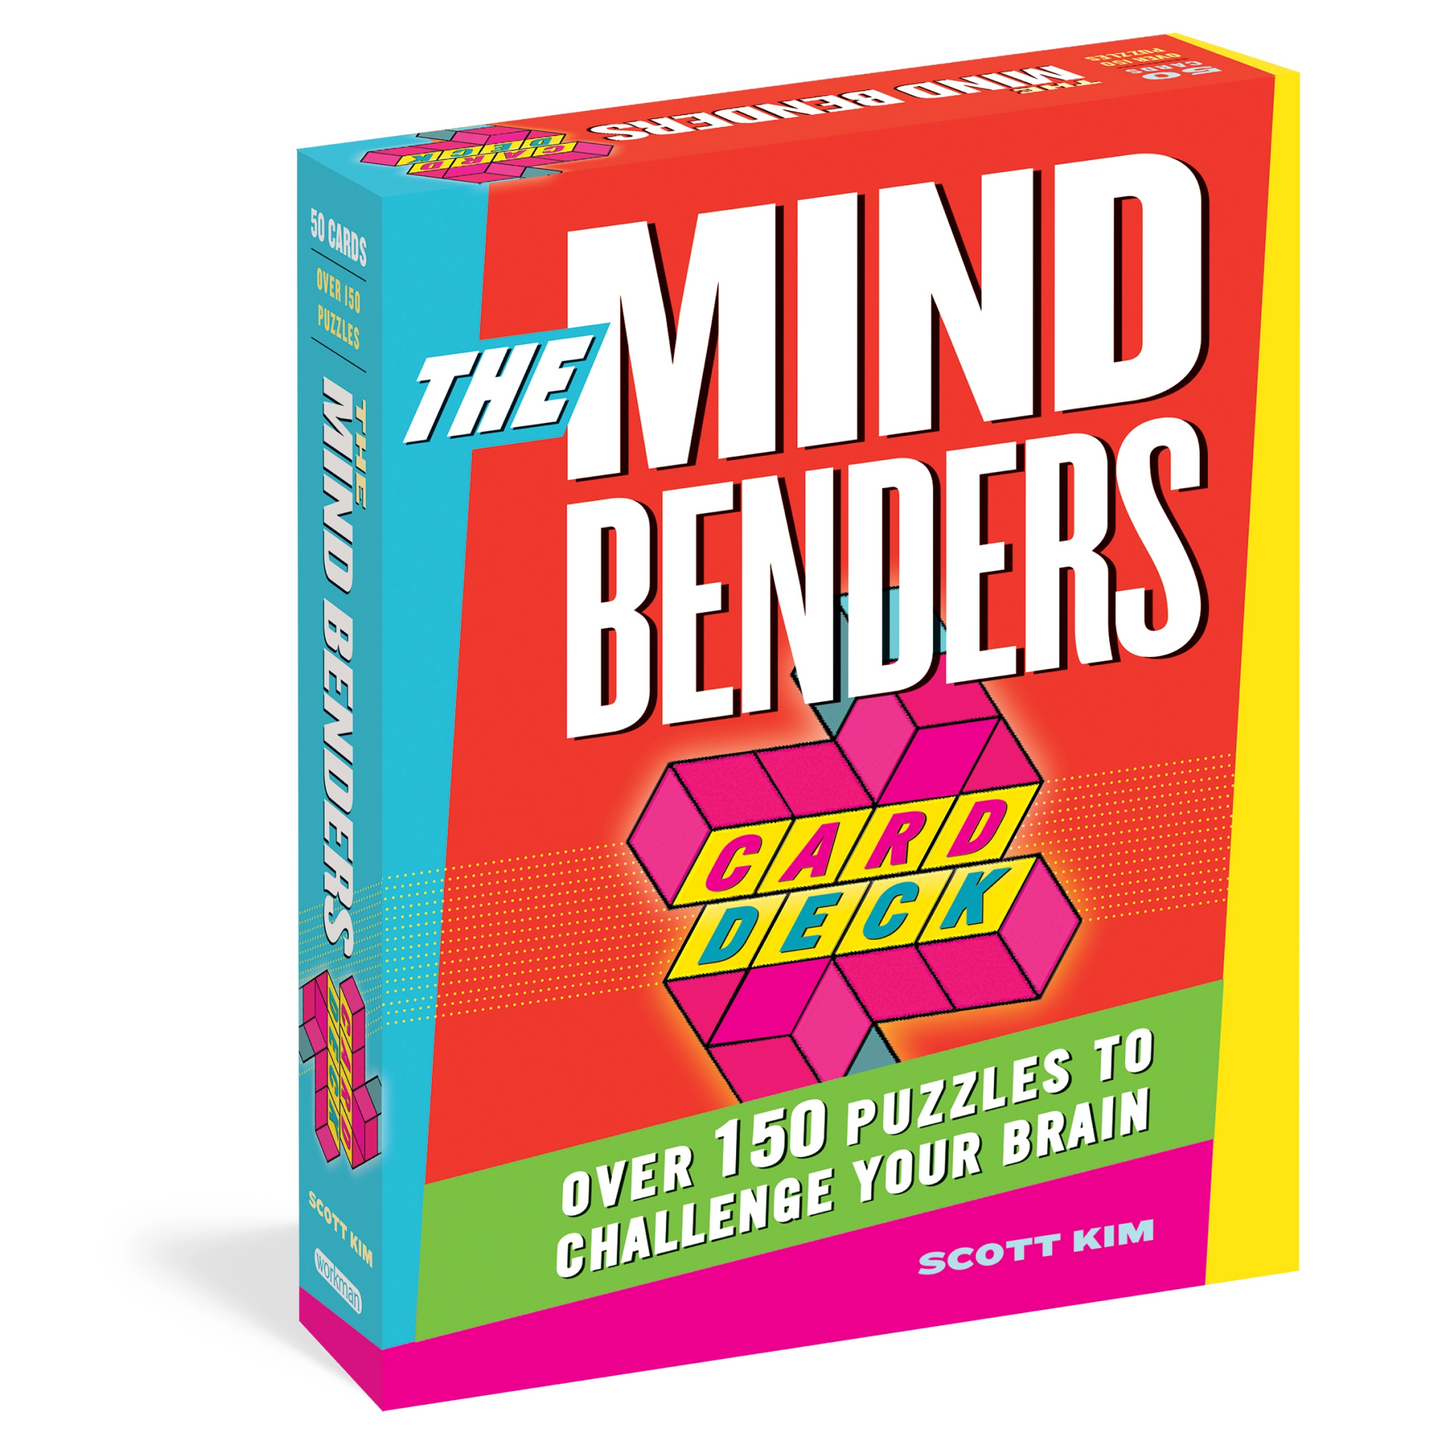 The Mind Benders Card Deck